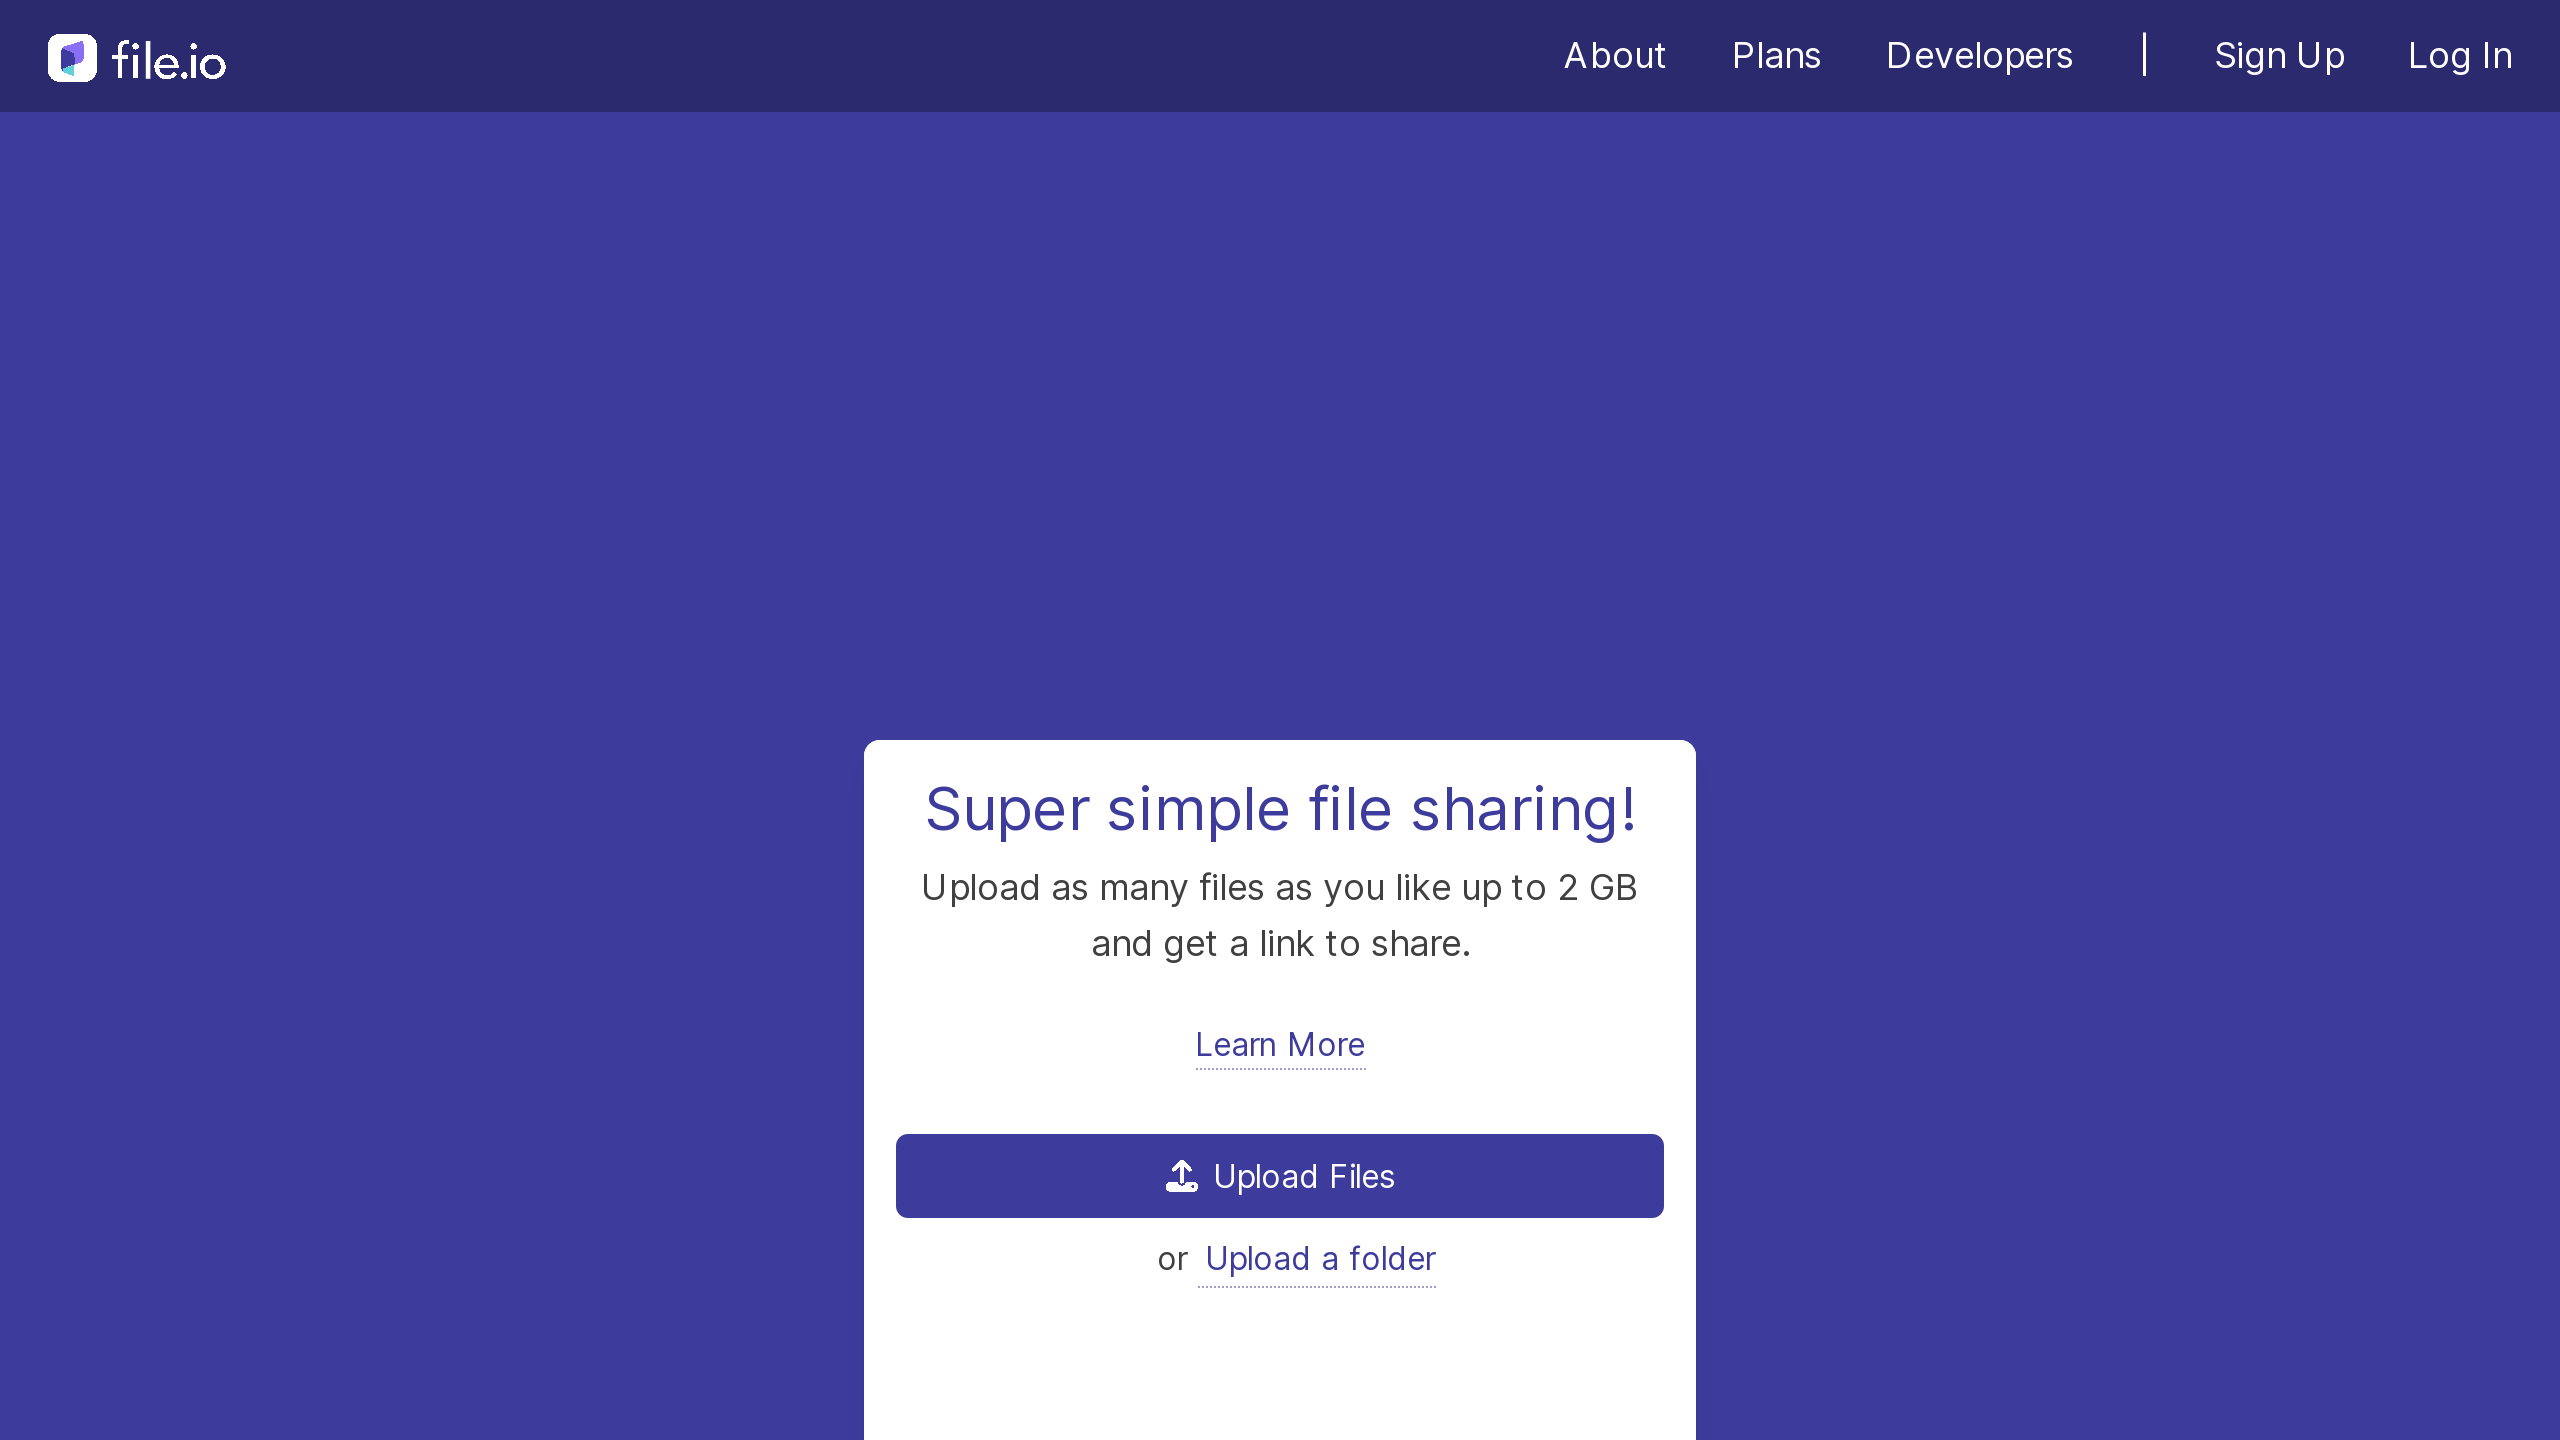 File.io's website screenshot